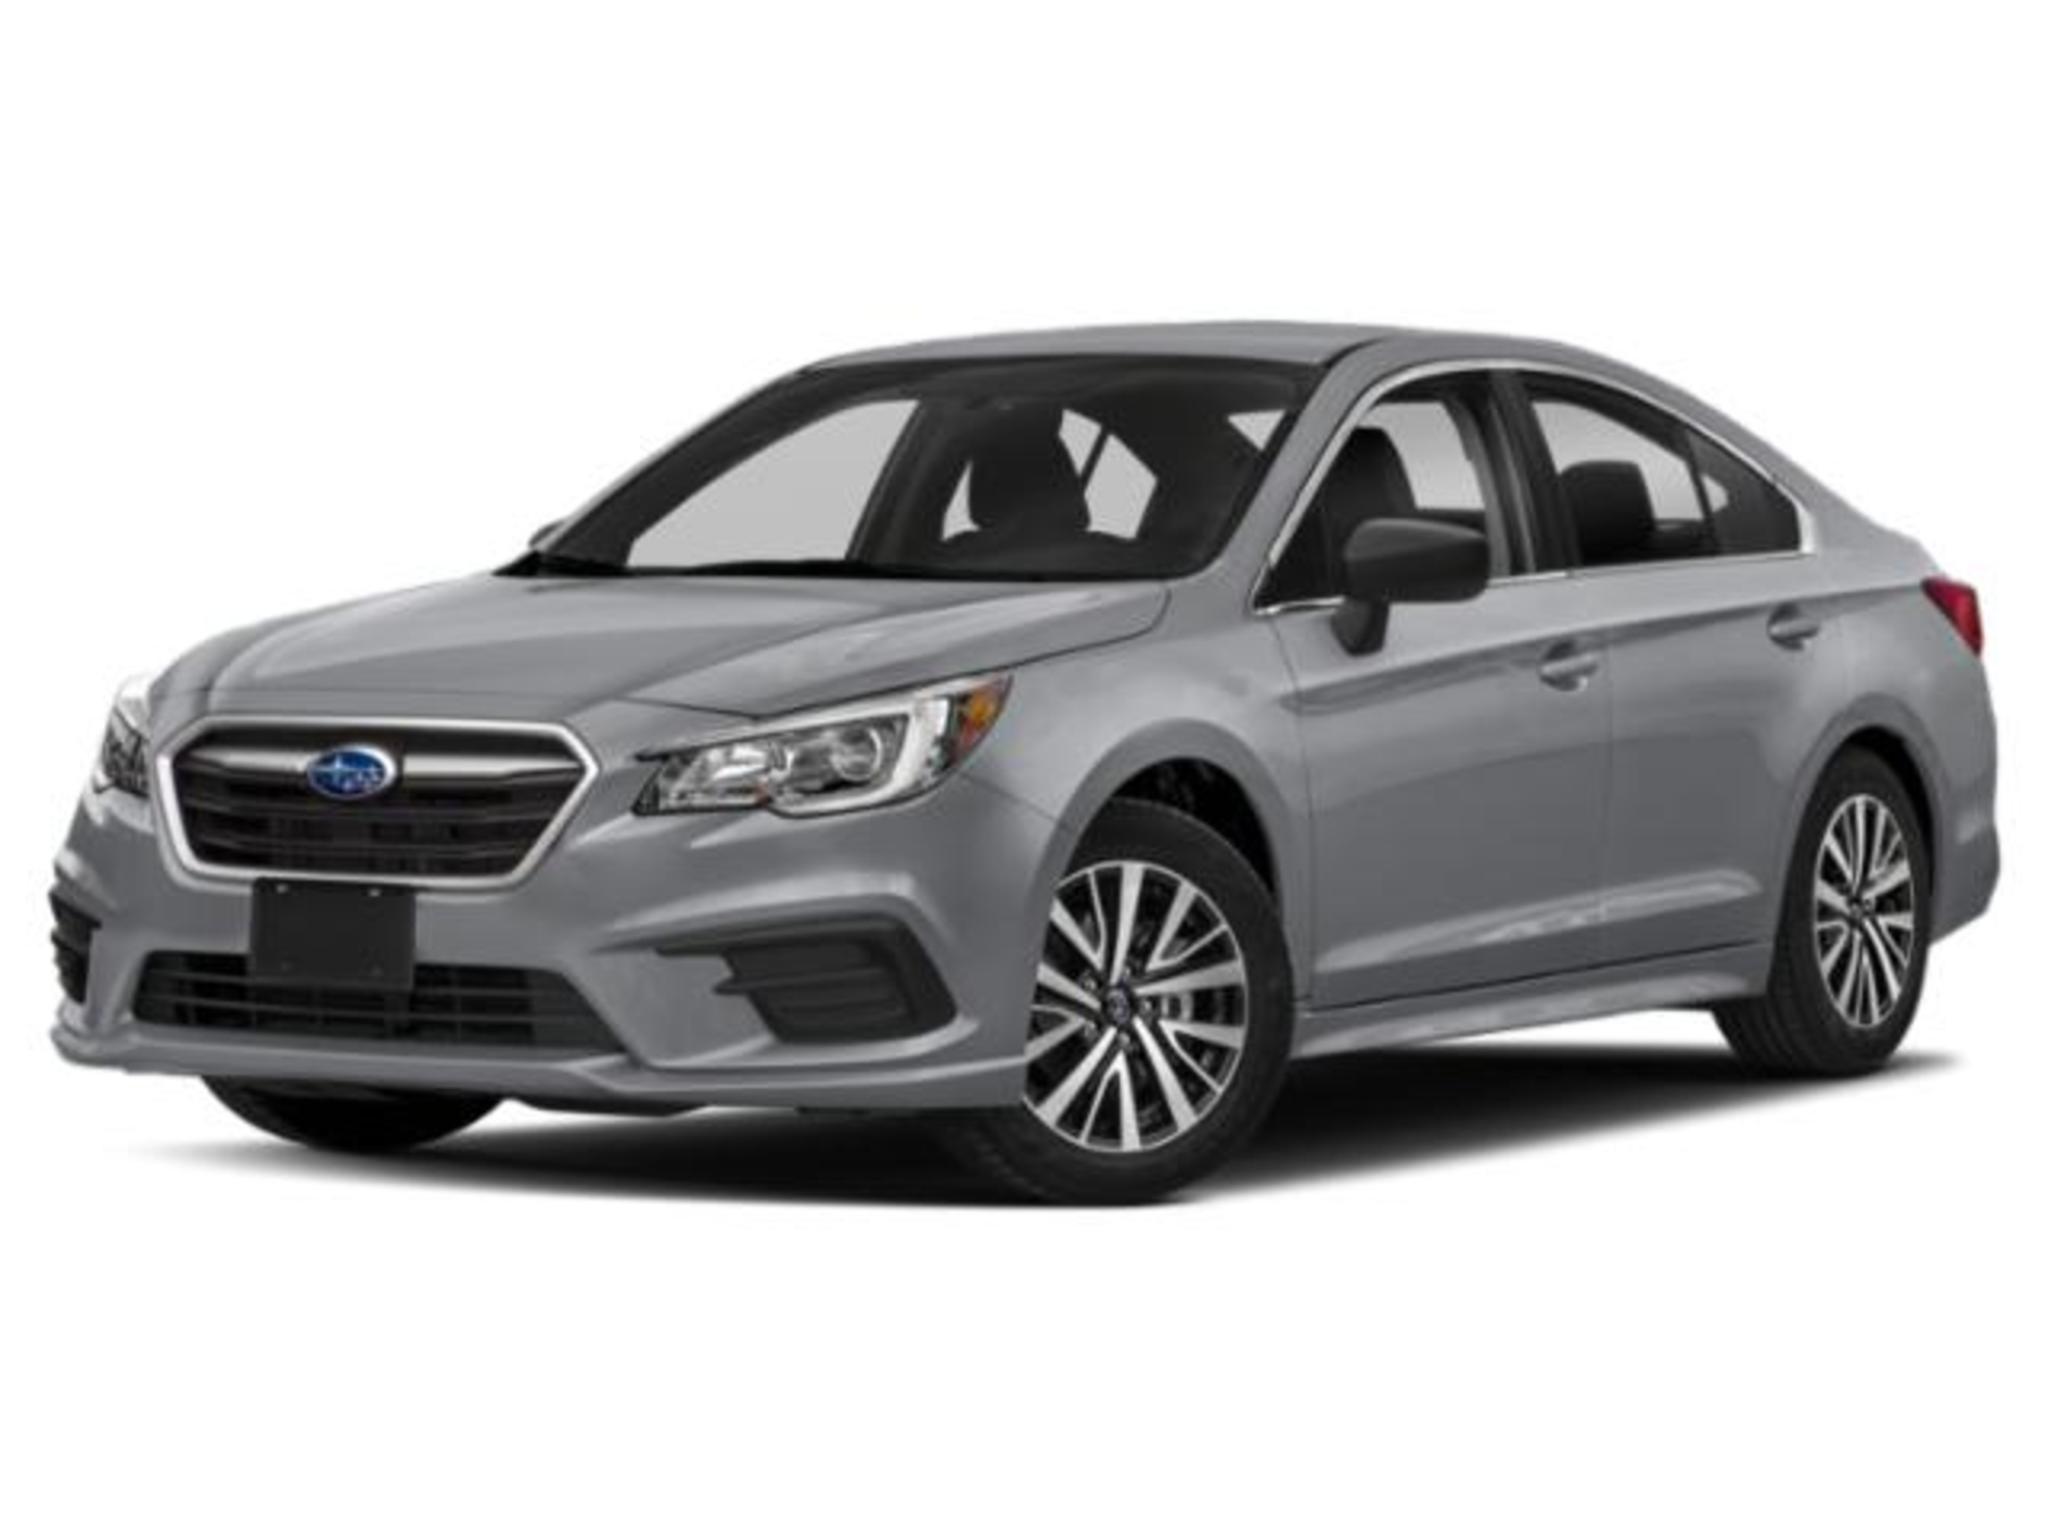 2019 Subaru Legacy - Compare Prices, Trims, Options, Specs, Photos